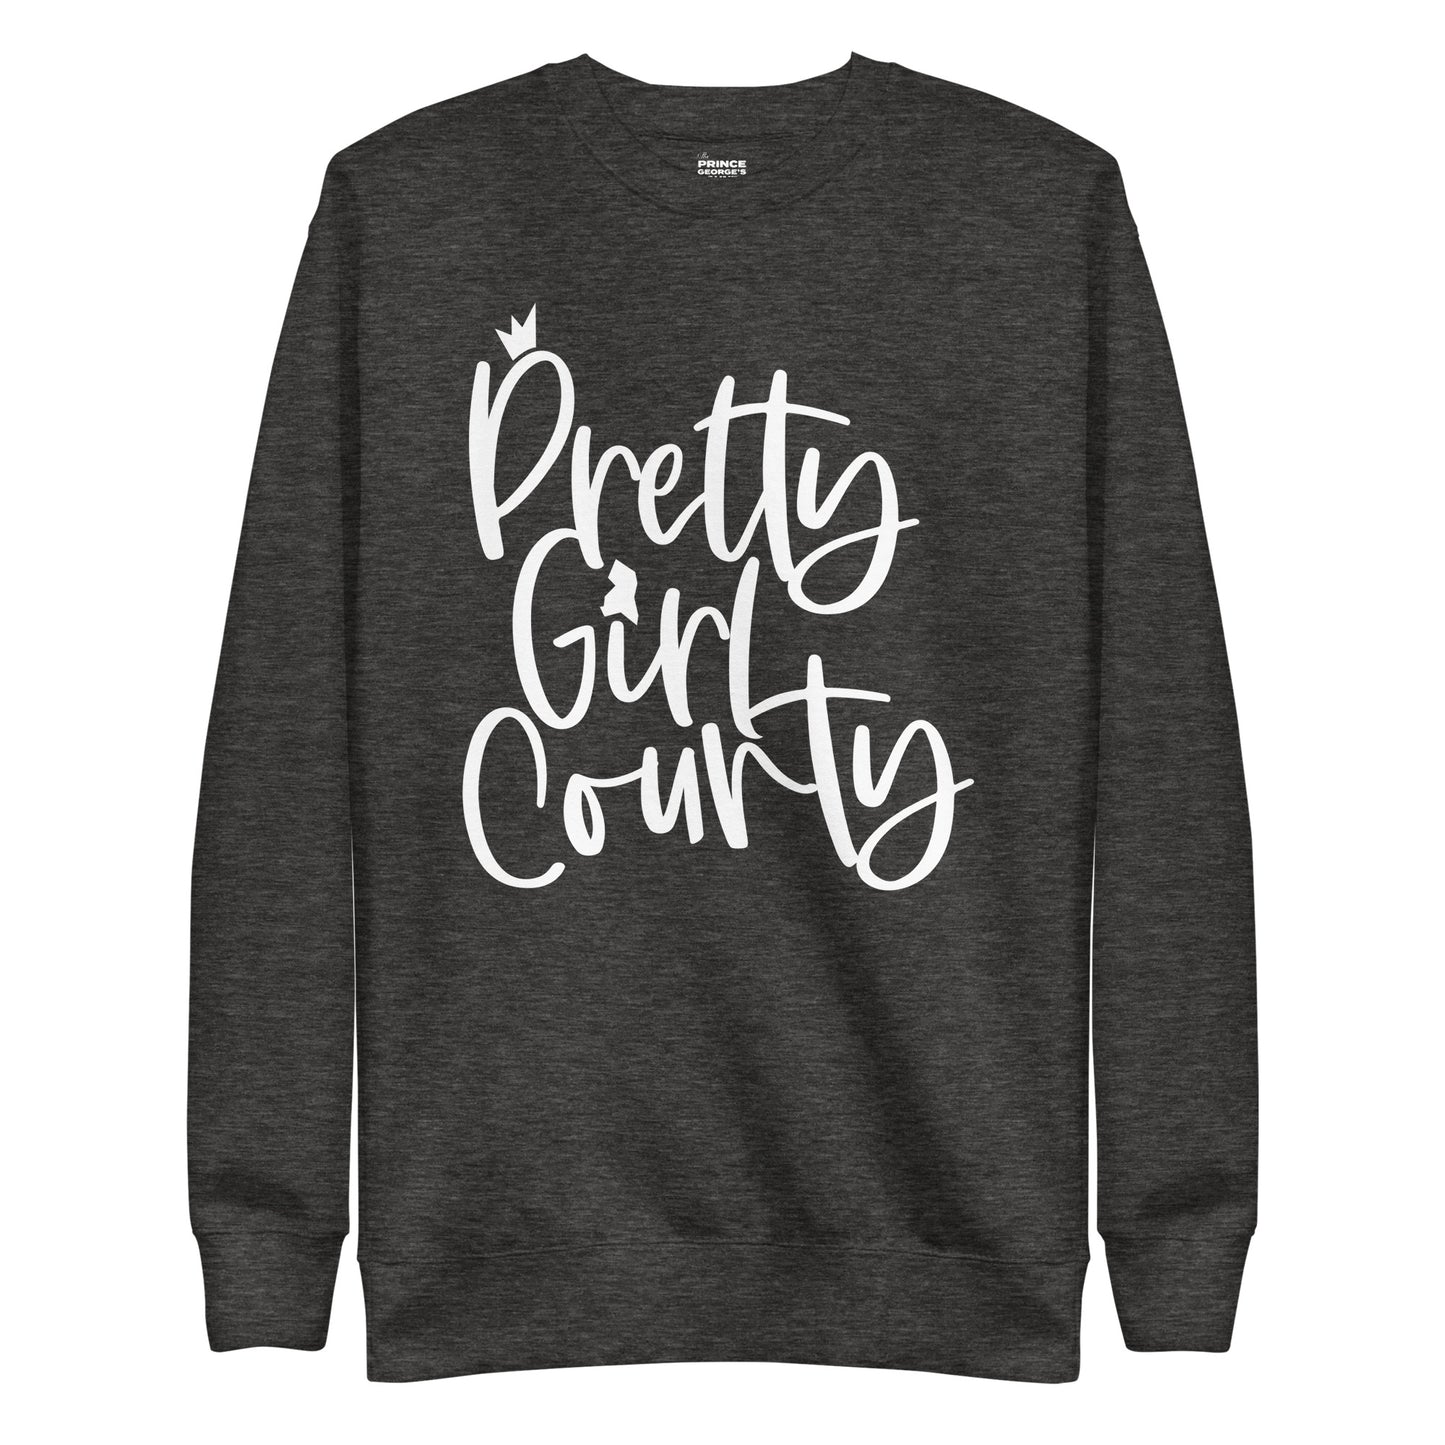 Pretty Girl County Cursive Unisex Premium Sweatshirt